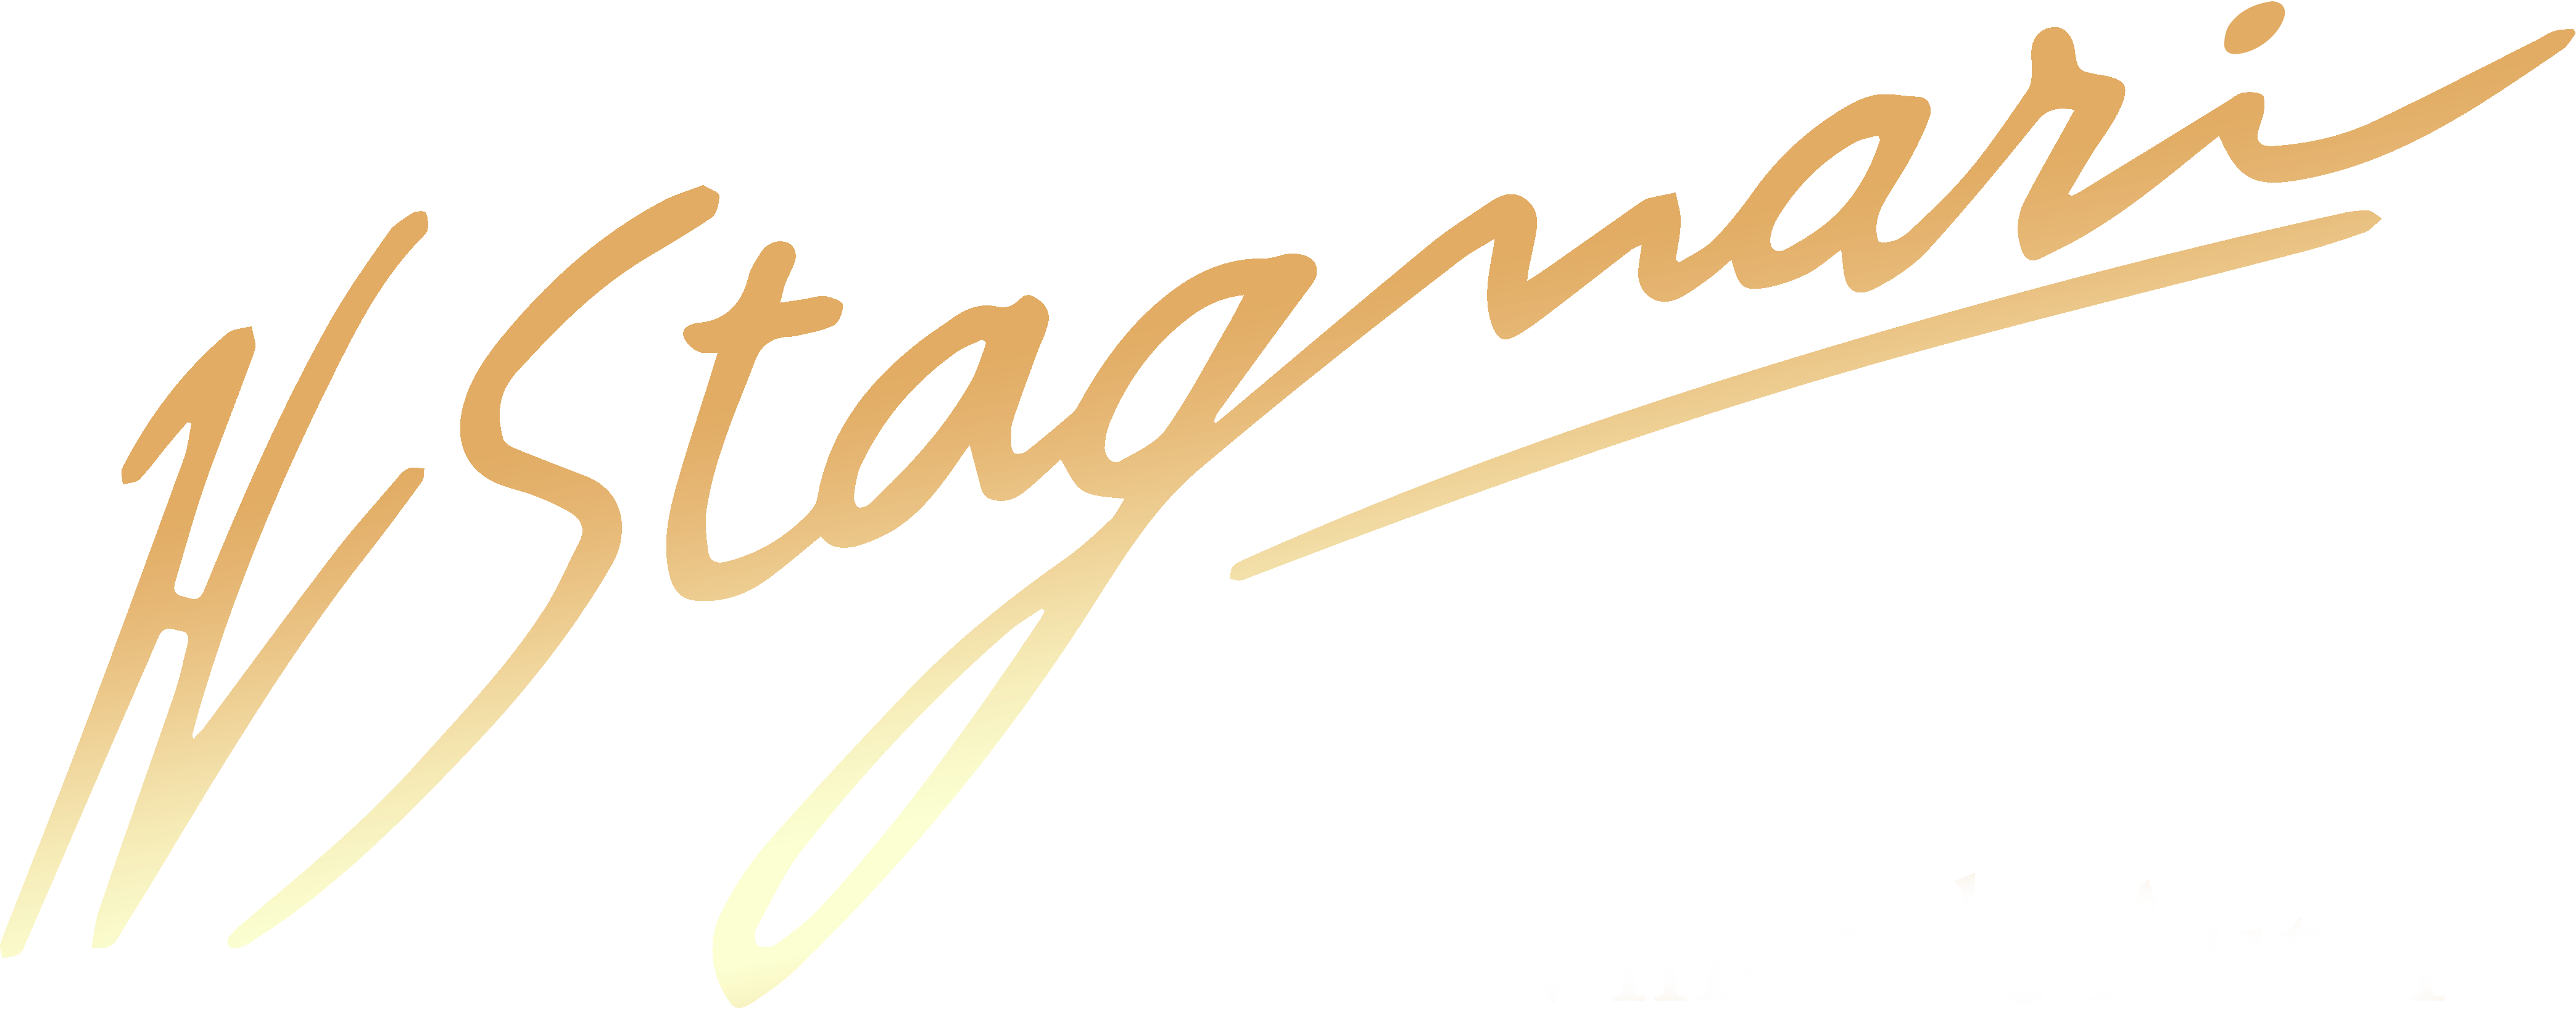 H. Stagnari Brasil